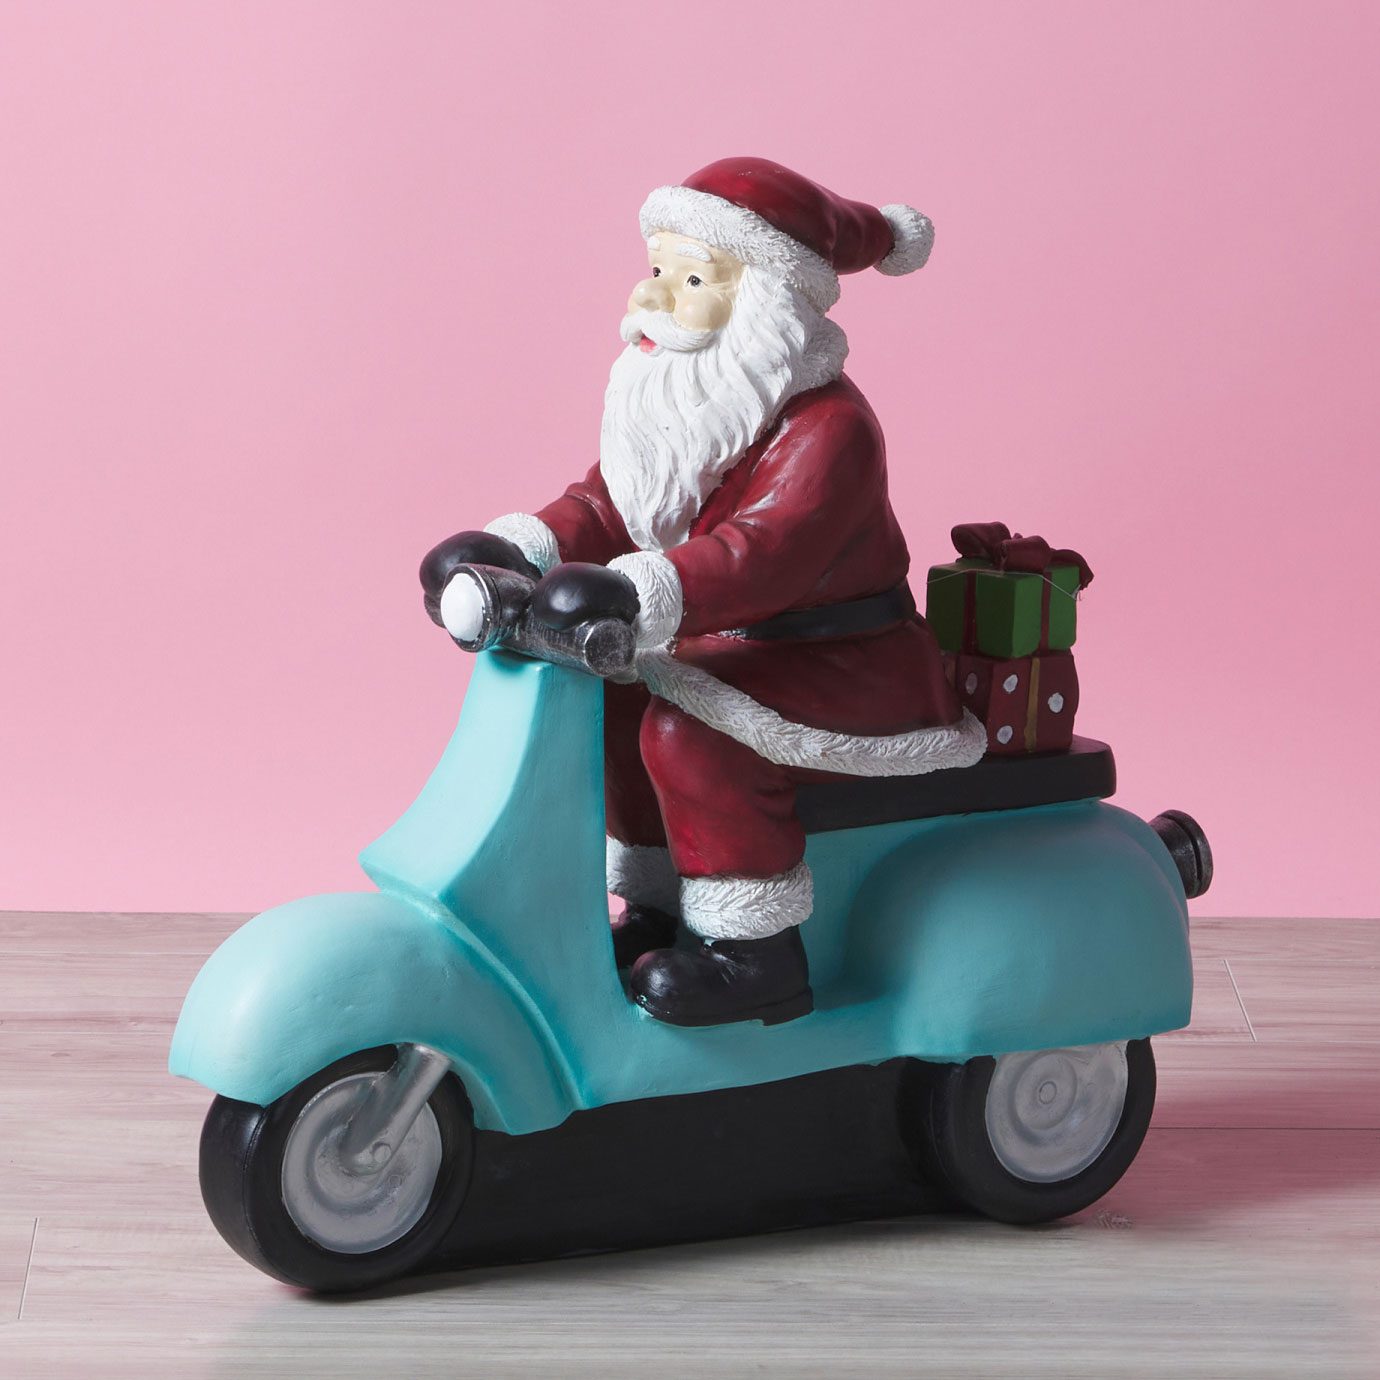 Scooter Santa